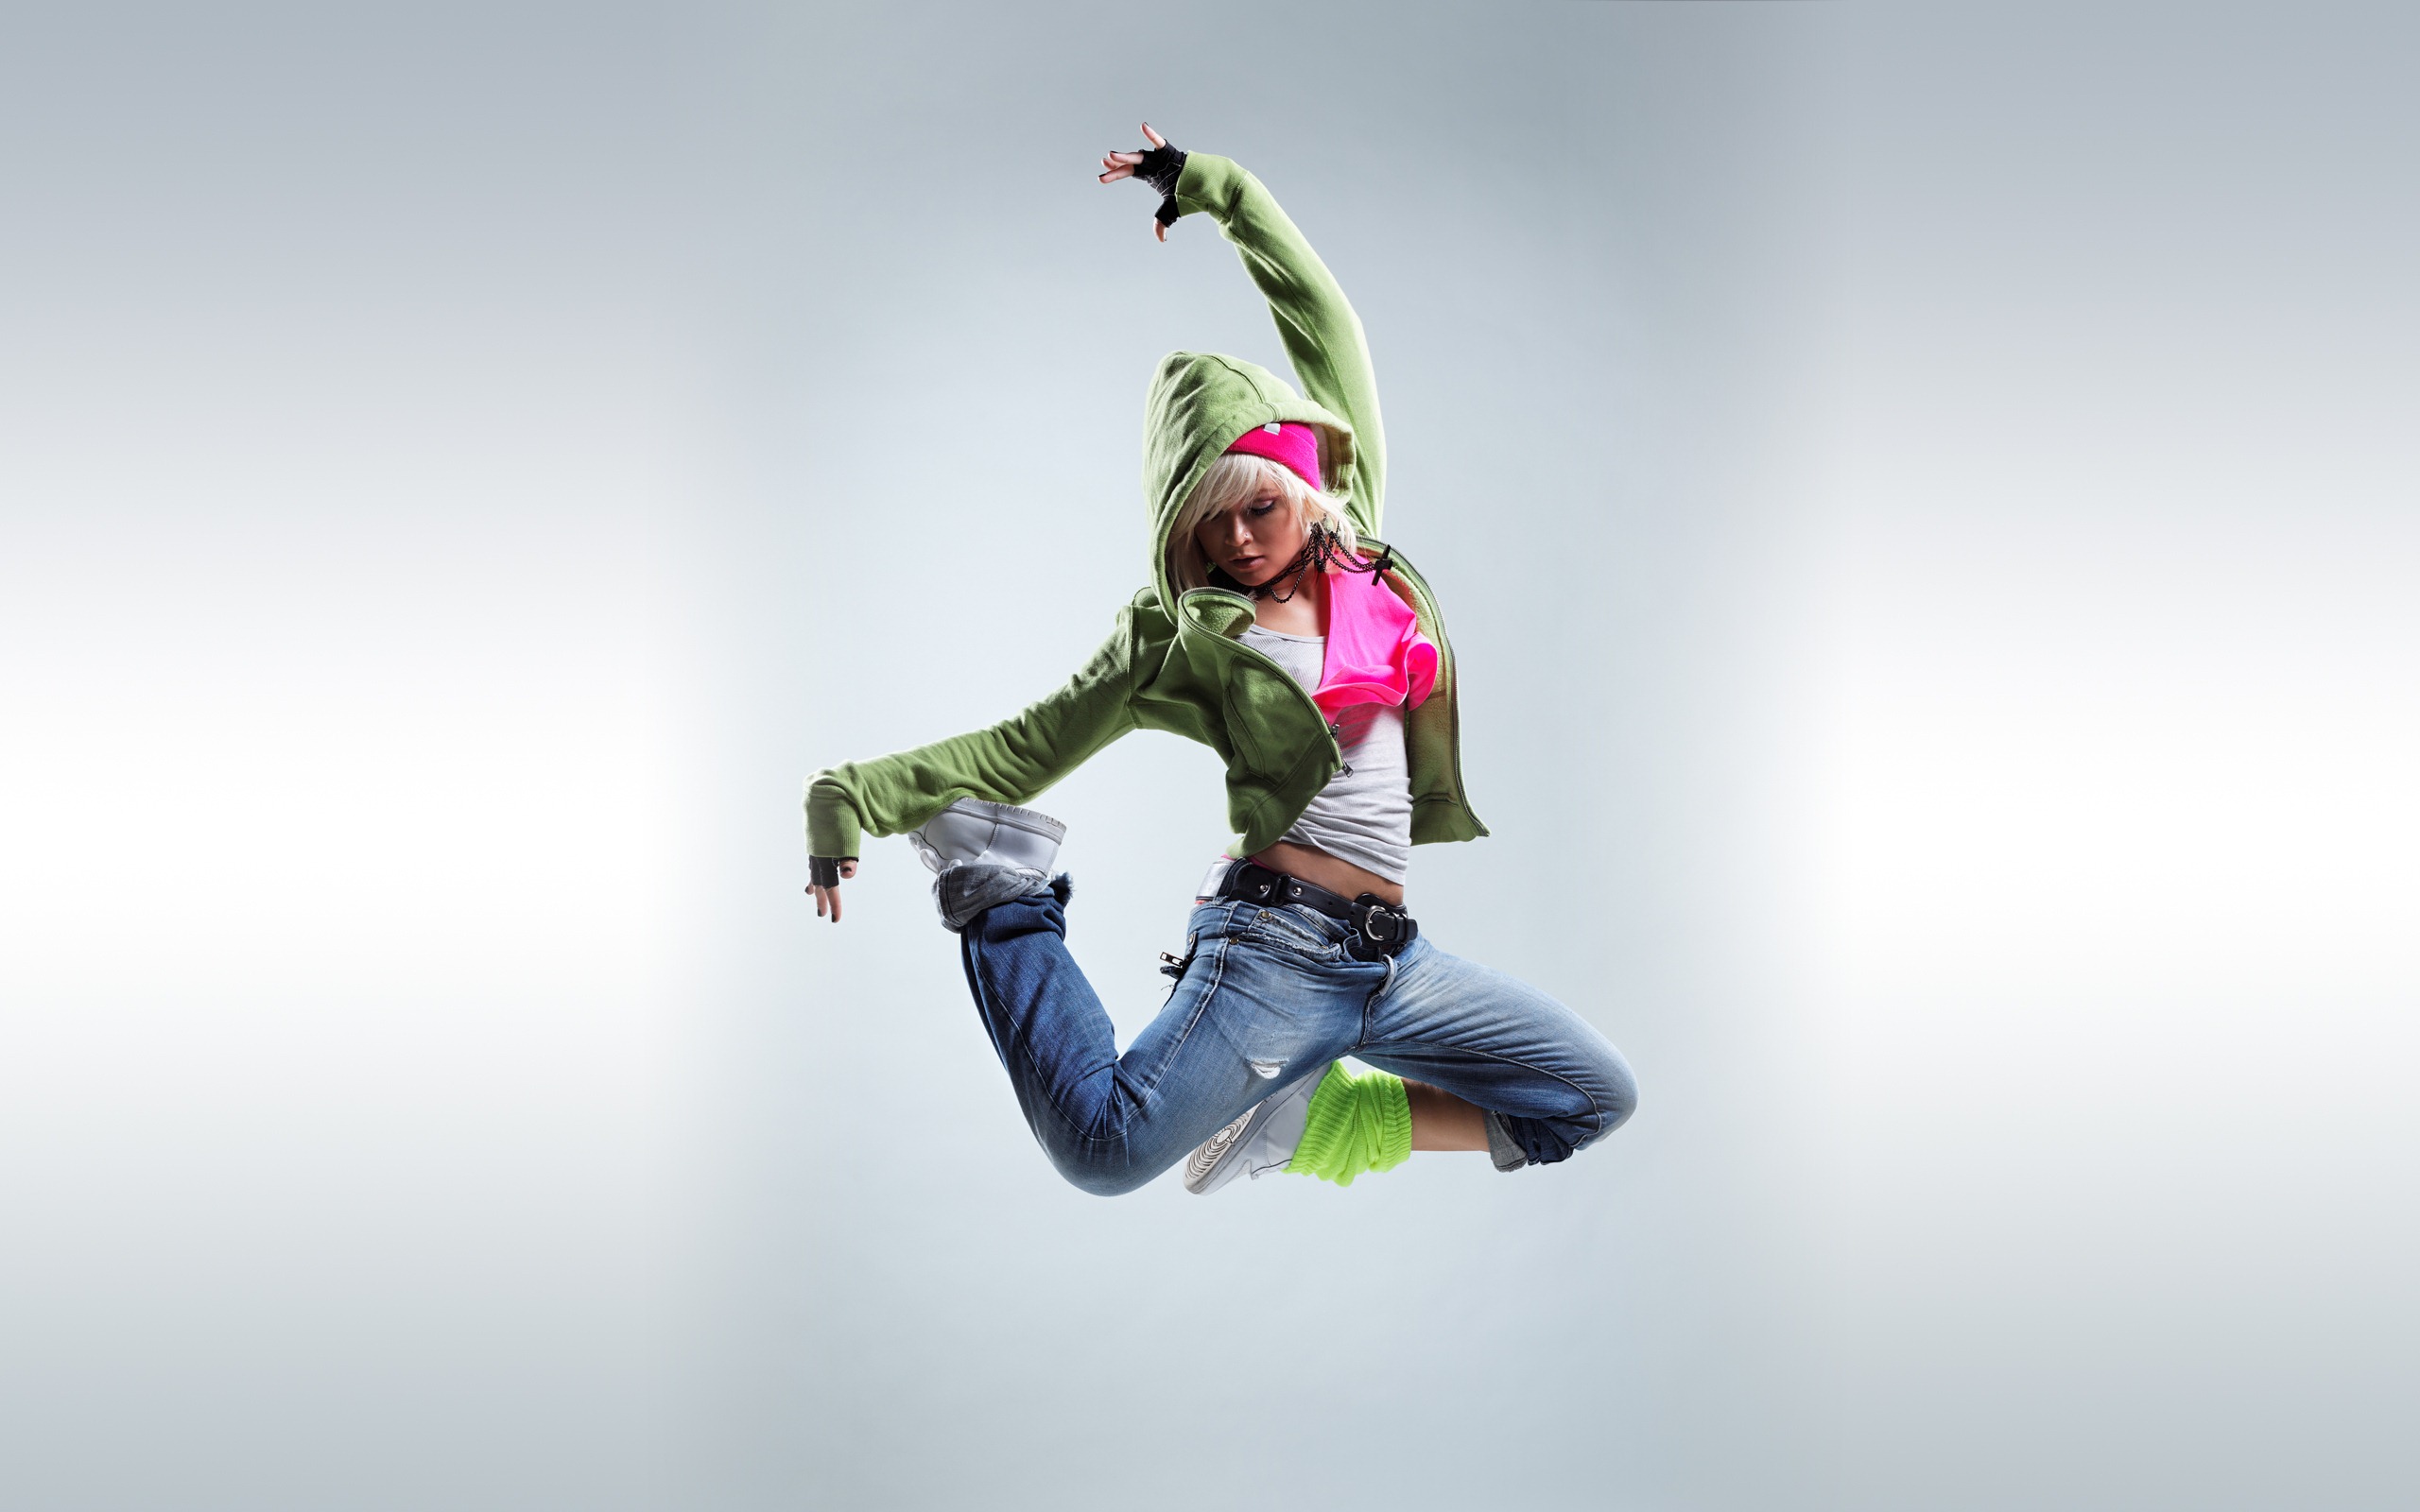 hip hop girl wallpaper,jumping,fun,extreme sport,happy,recreation